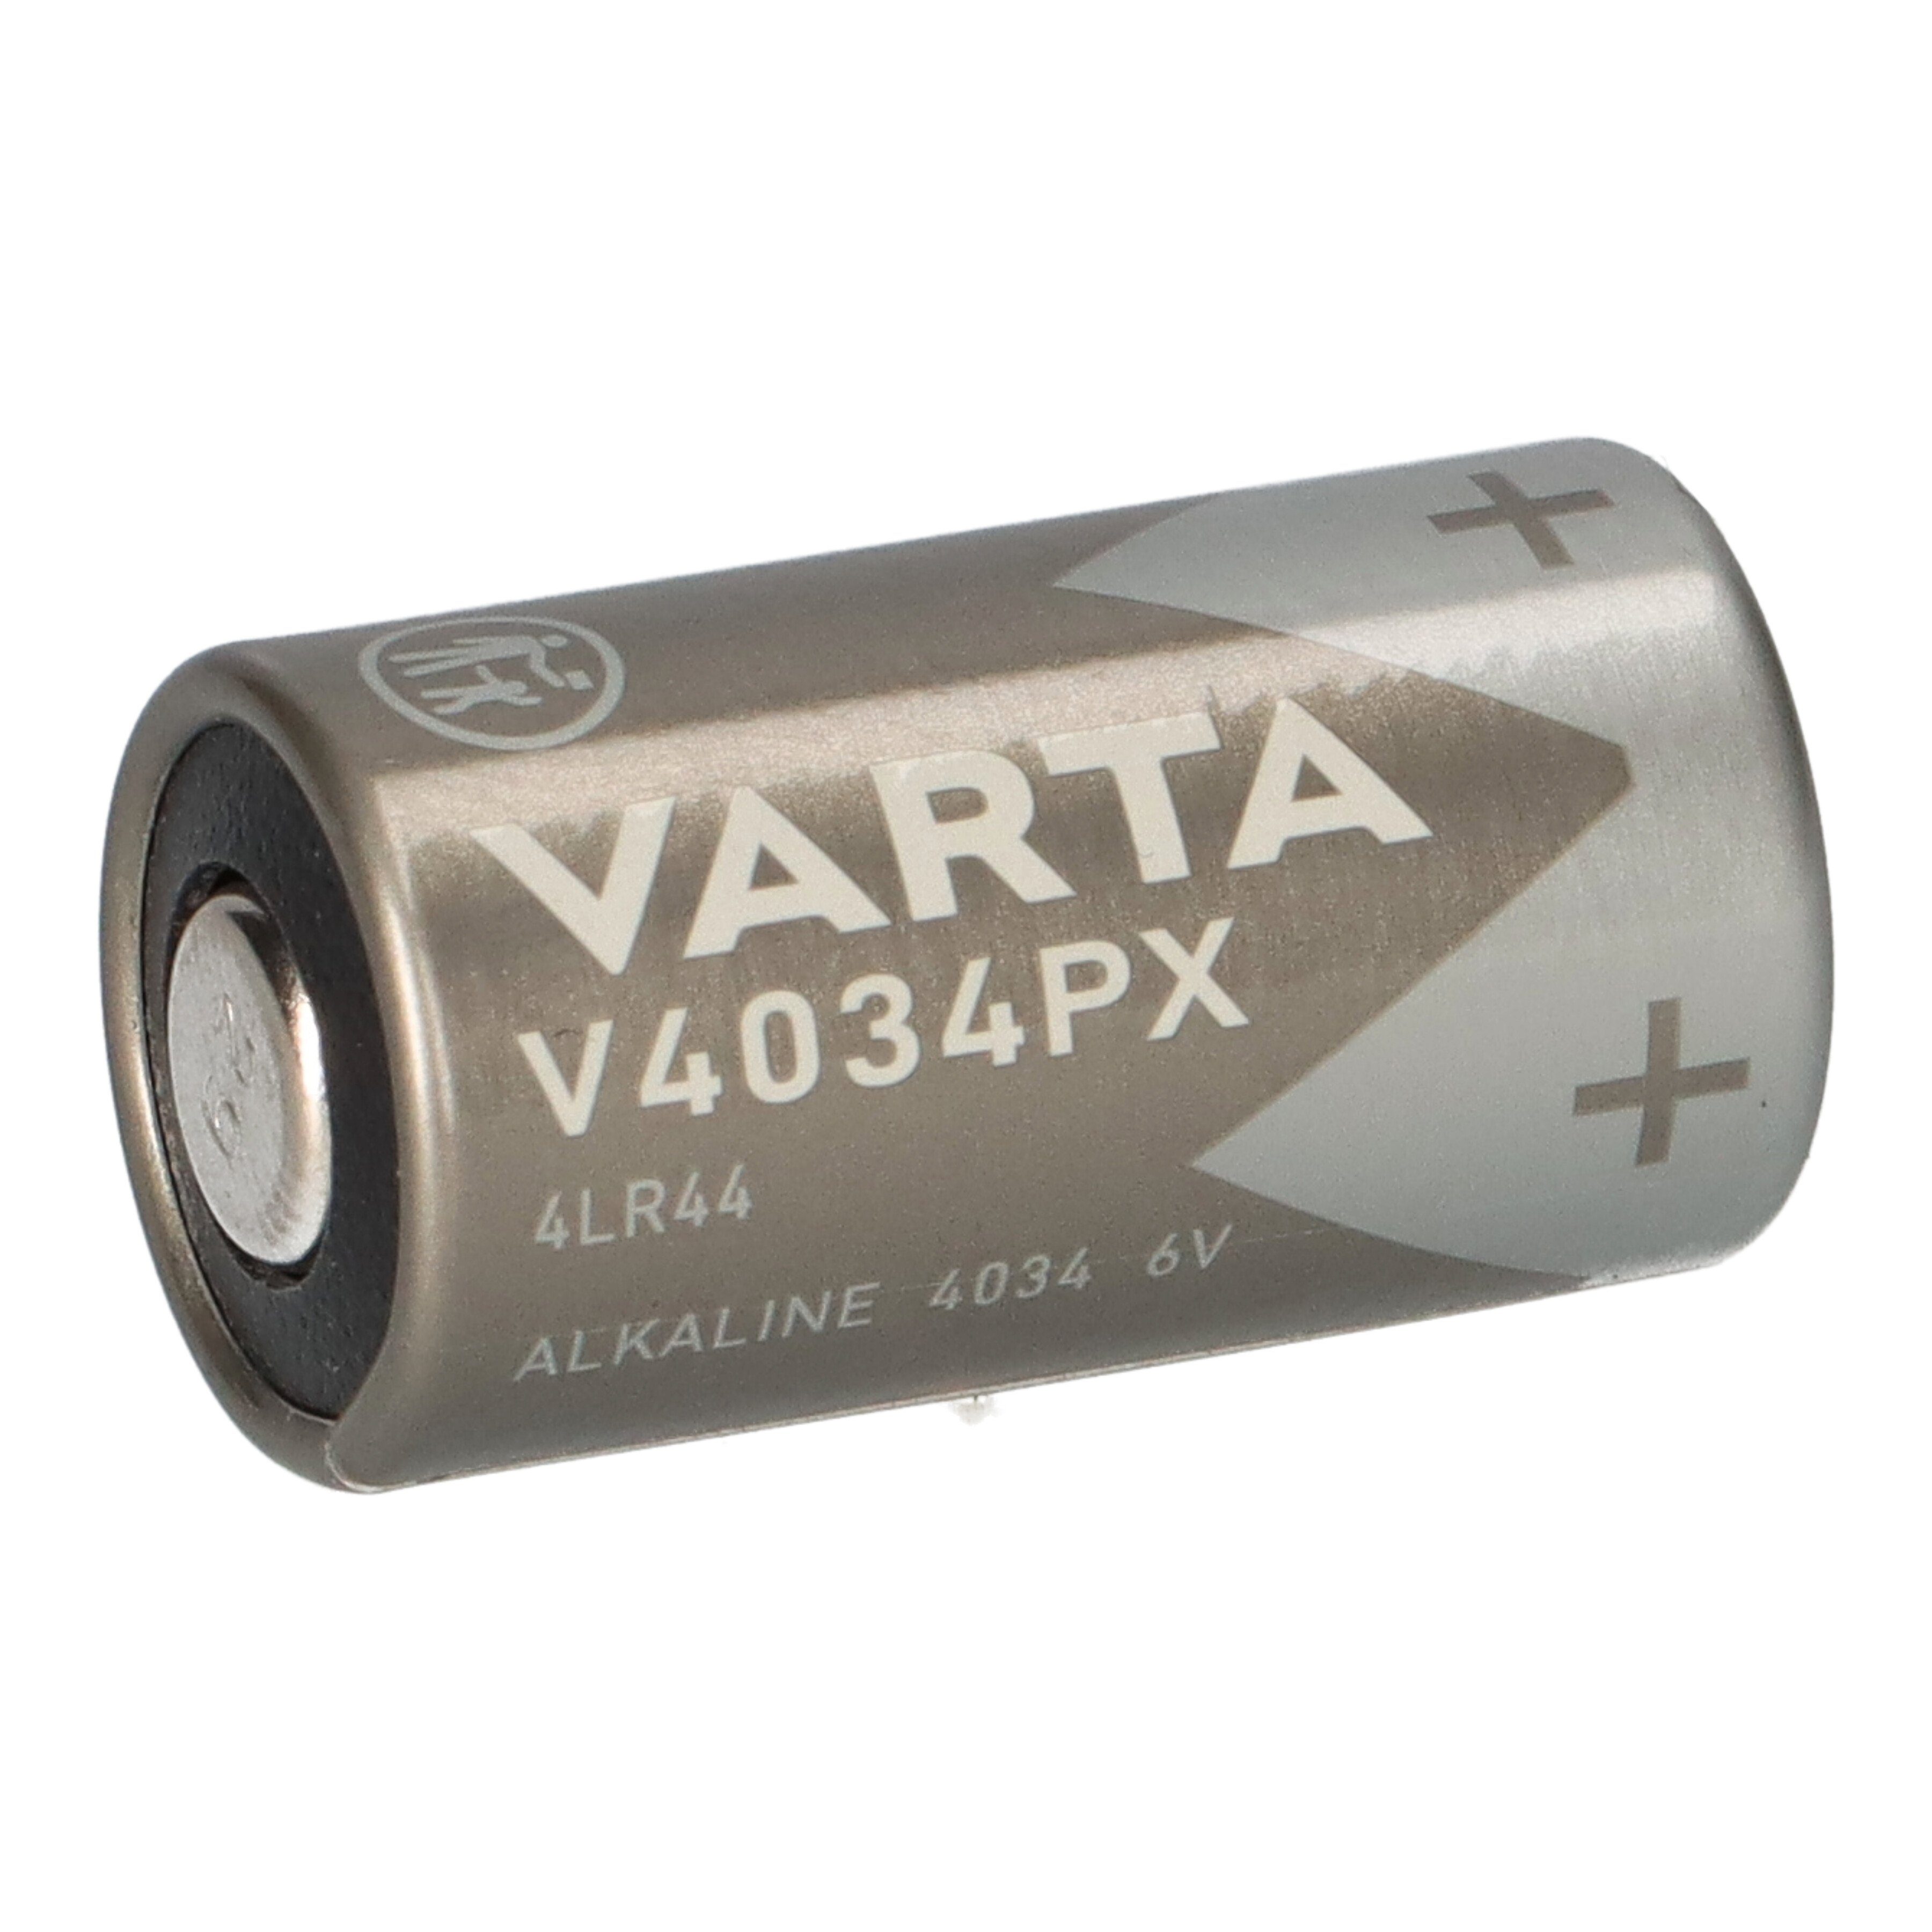 VARTA Batterie kompatibel zu Fernbedienung T100 Standheizung 4LR44 Batterie